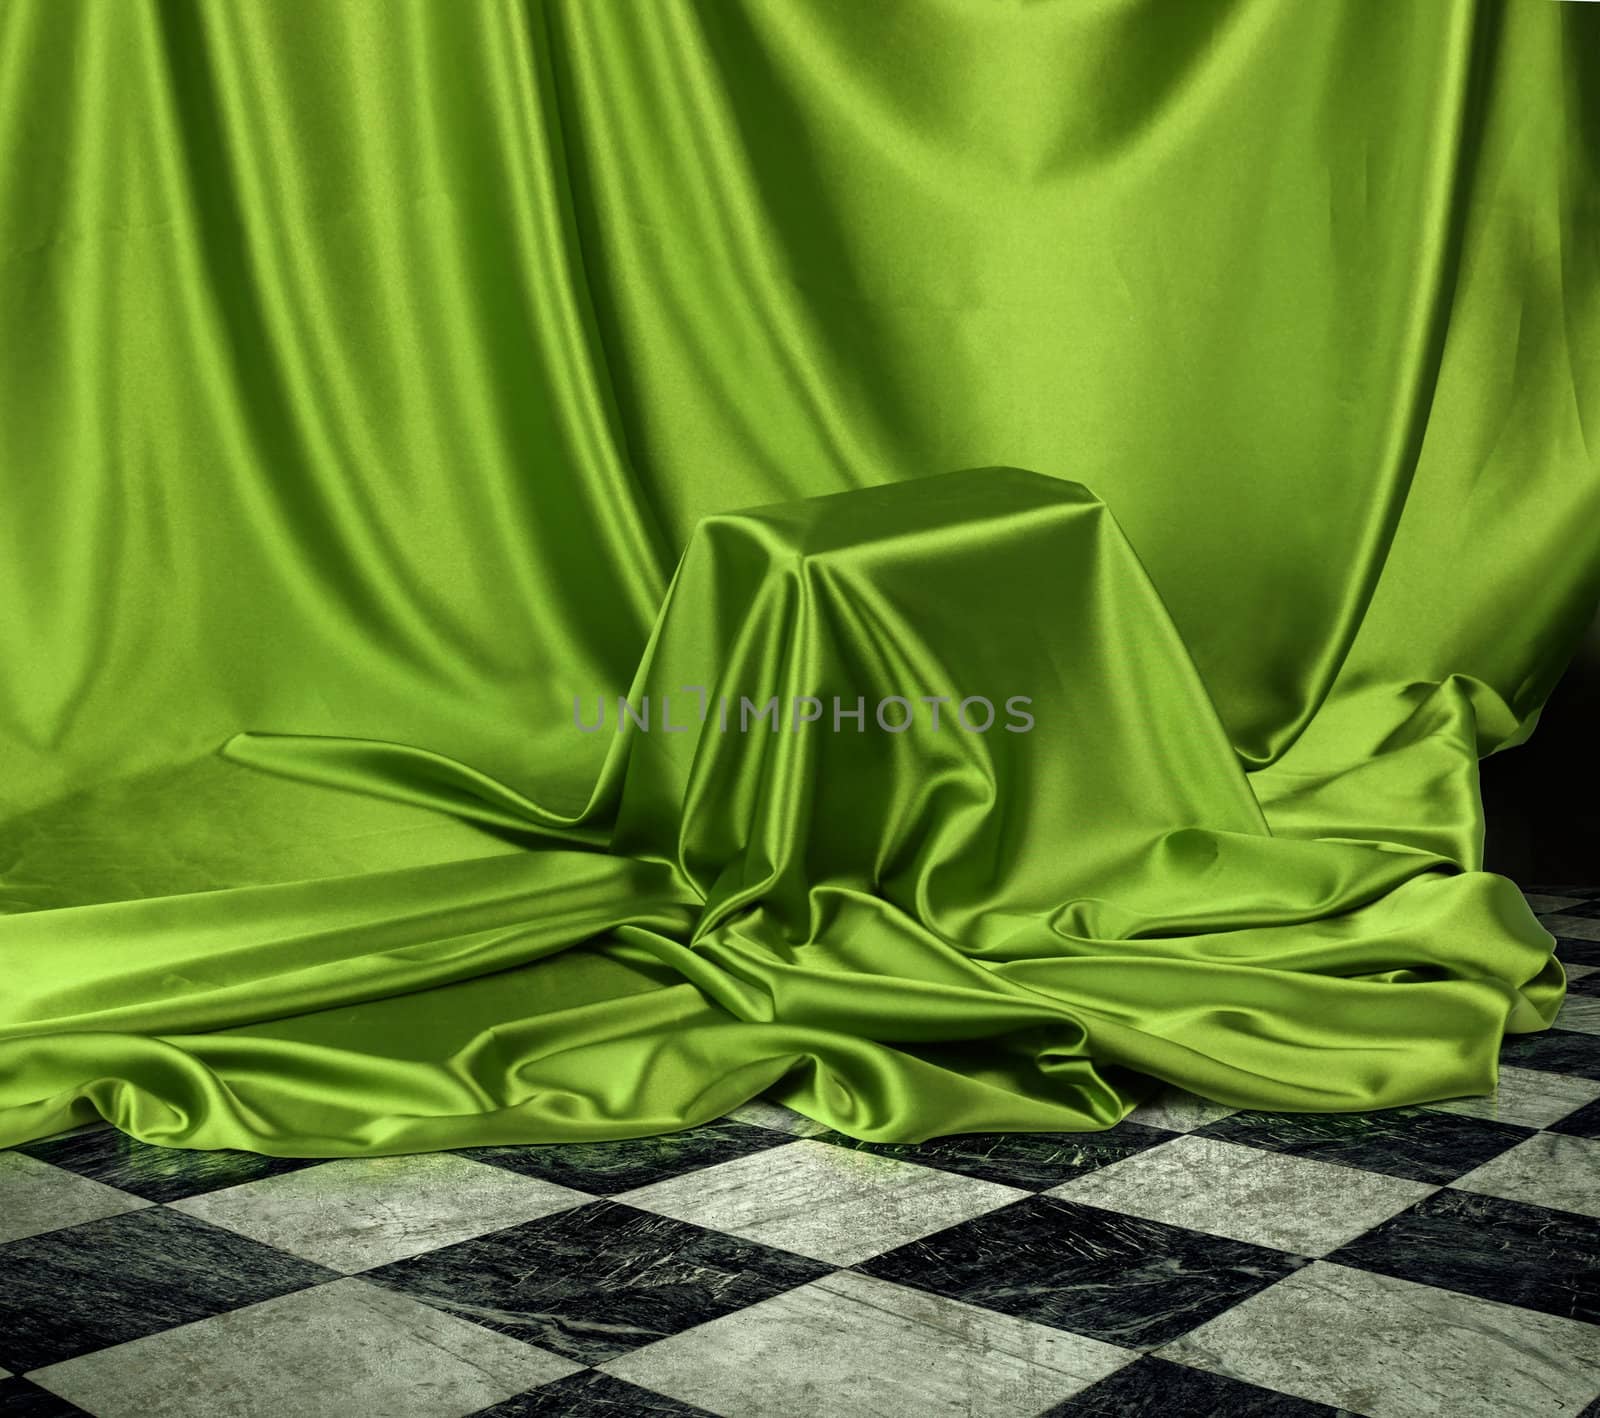 Something secret veiled under green satin silky cloth fabric